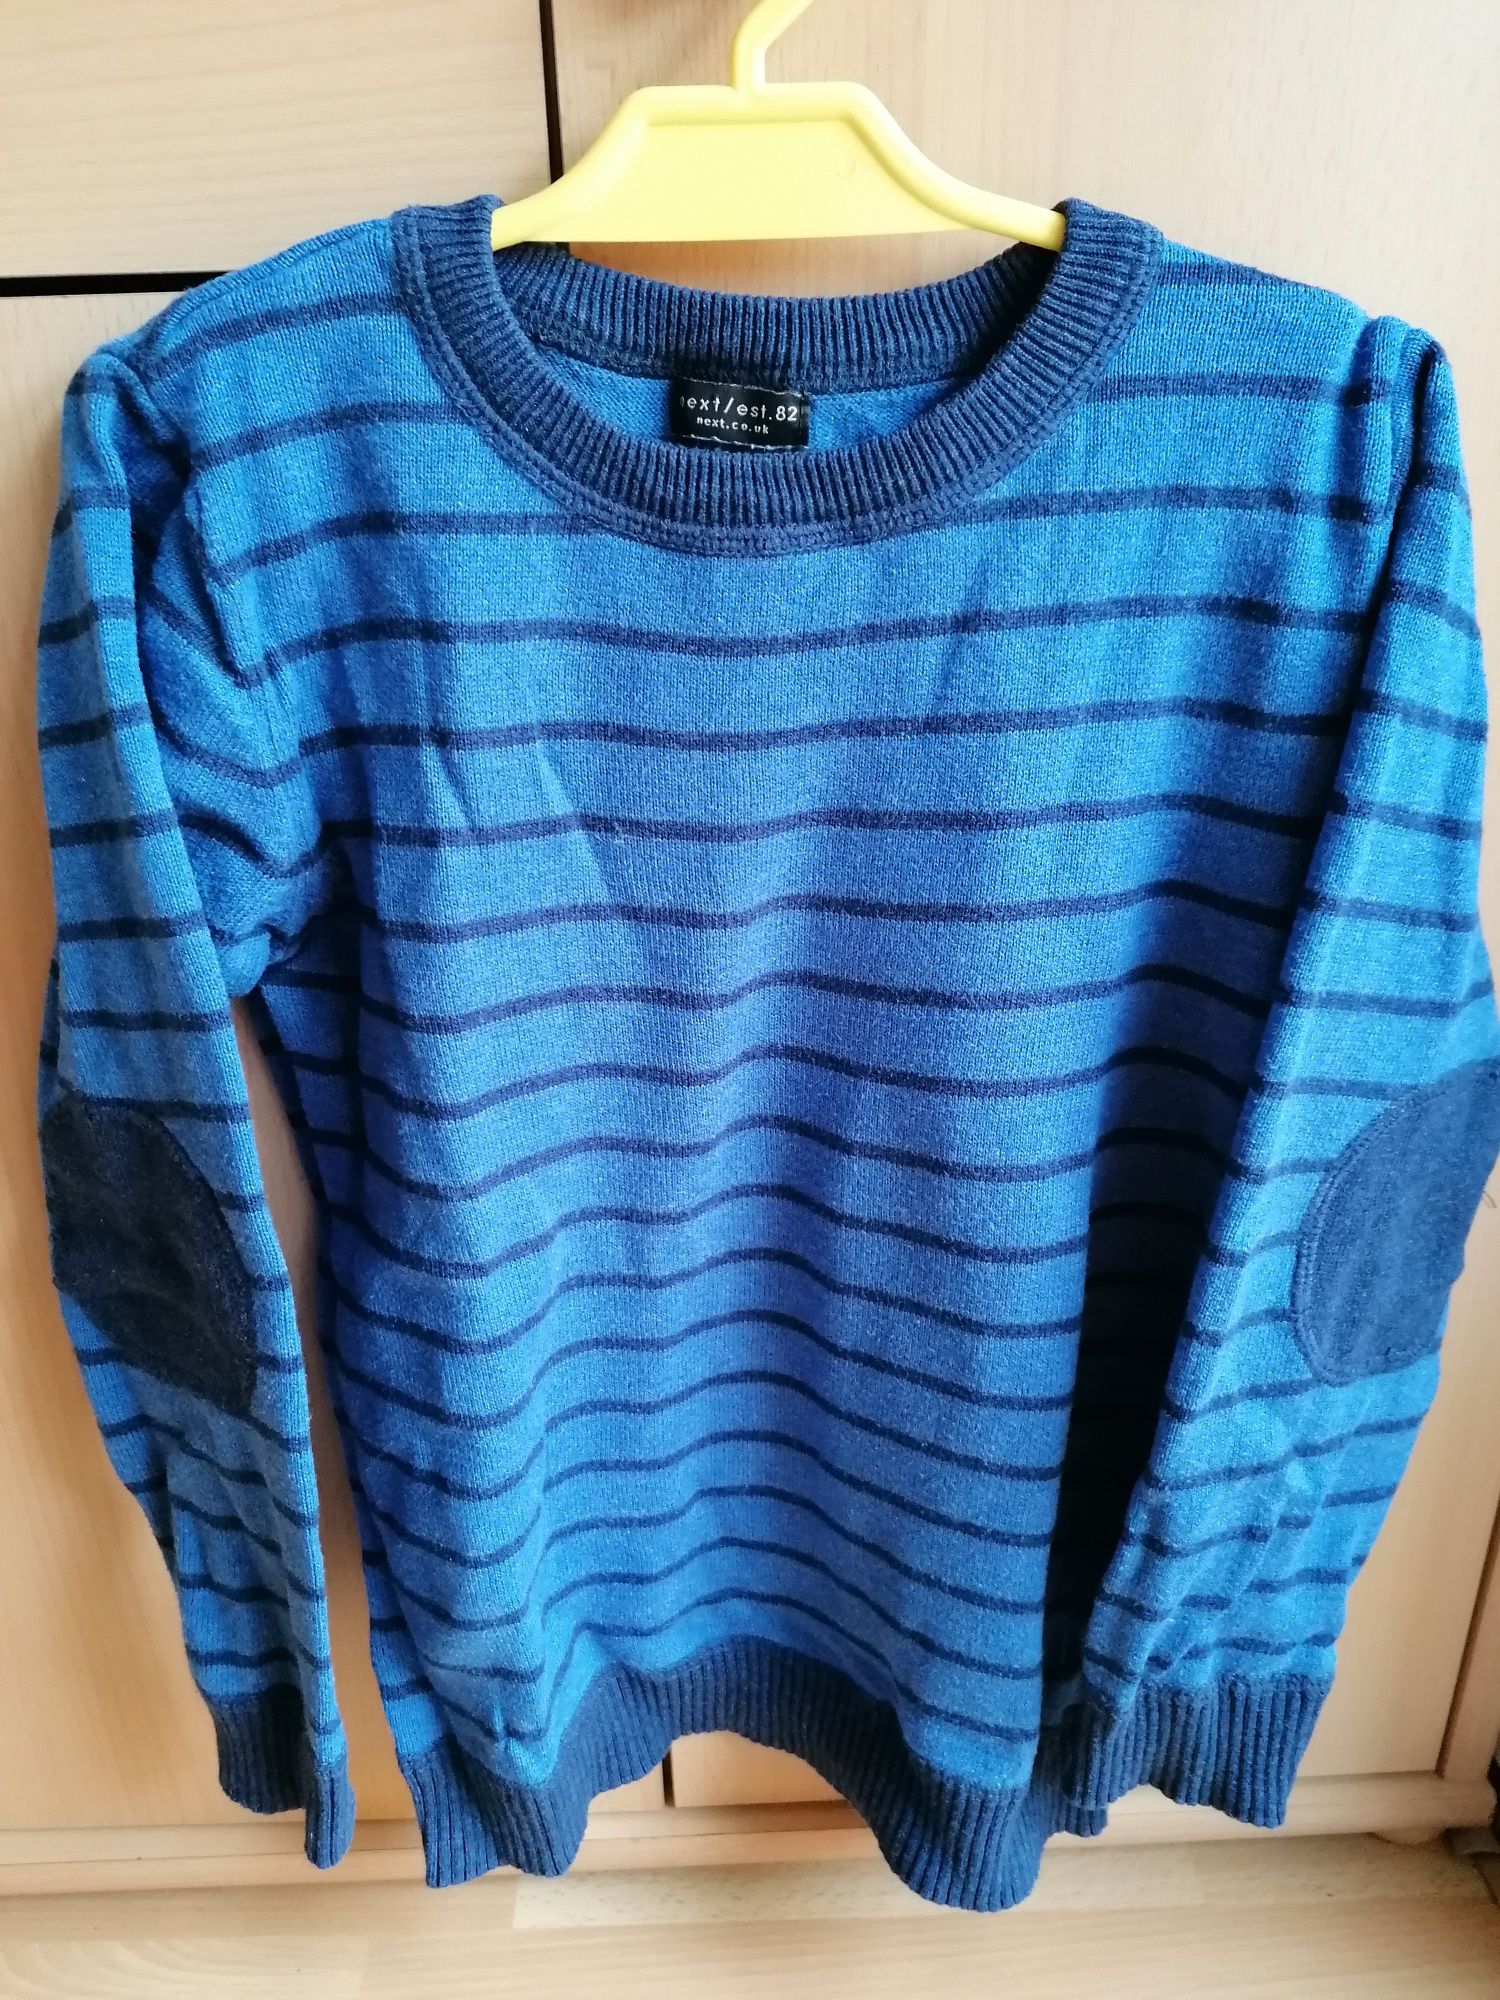 Sweterek niebieski w paski next 6 lat